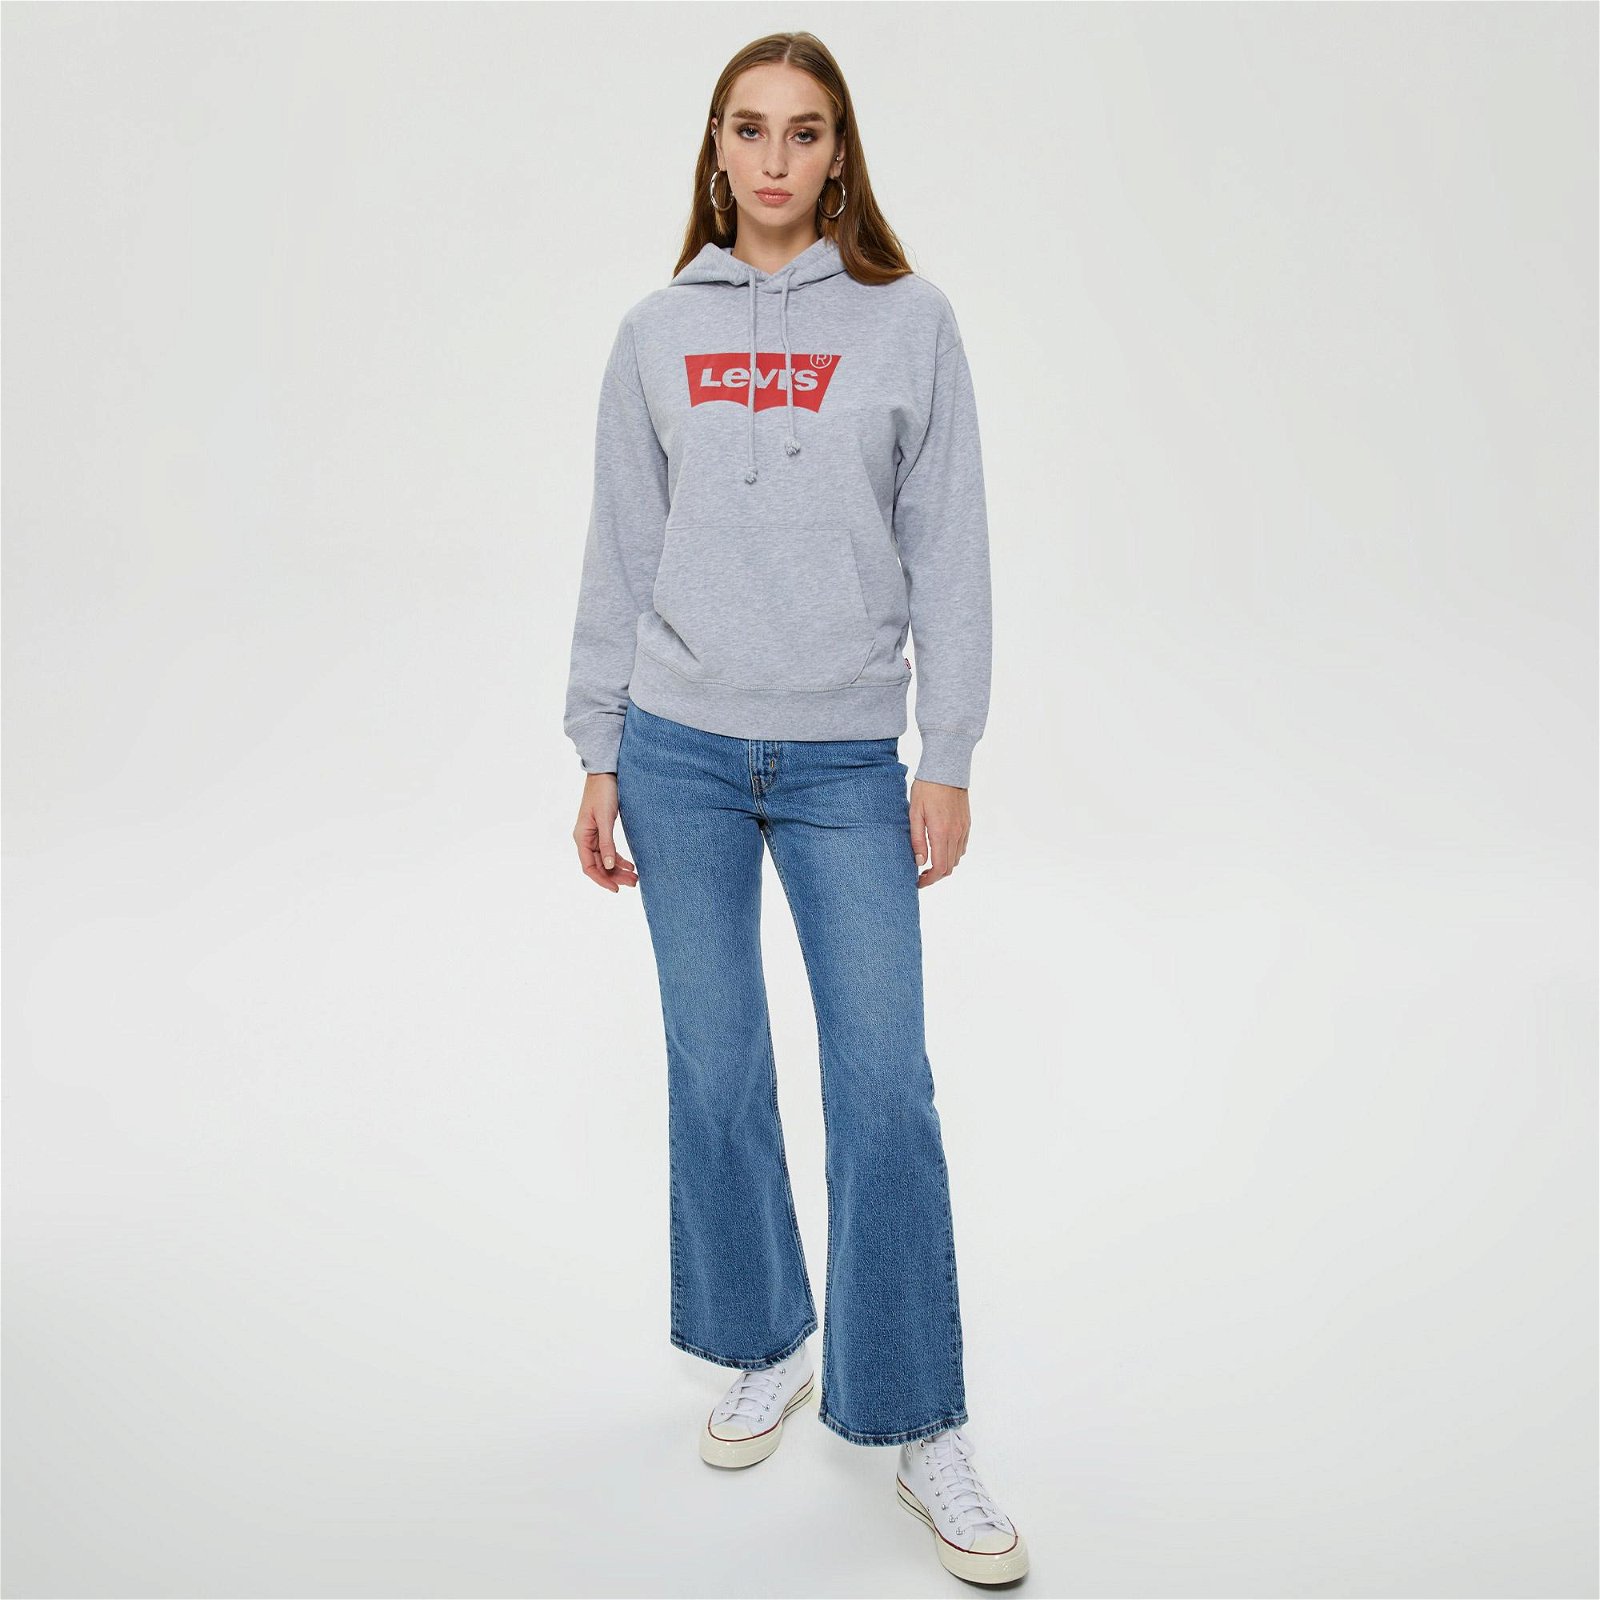 Levi's Graphic Standard Core Kadın Gri Hoodie Sweatshirt